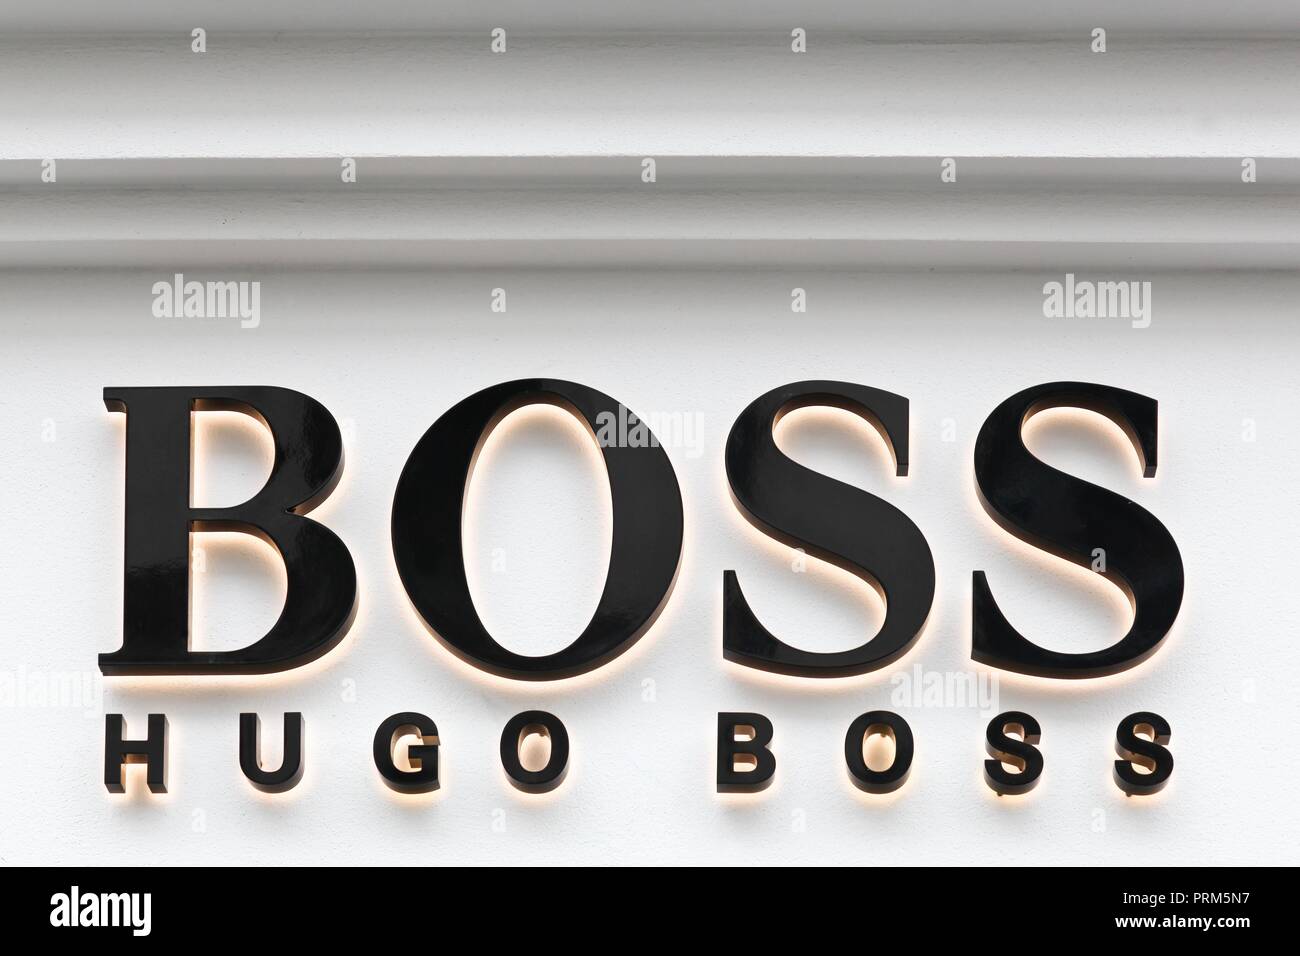 hugo boss sign up